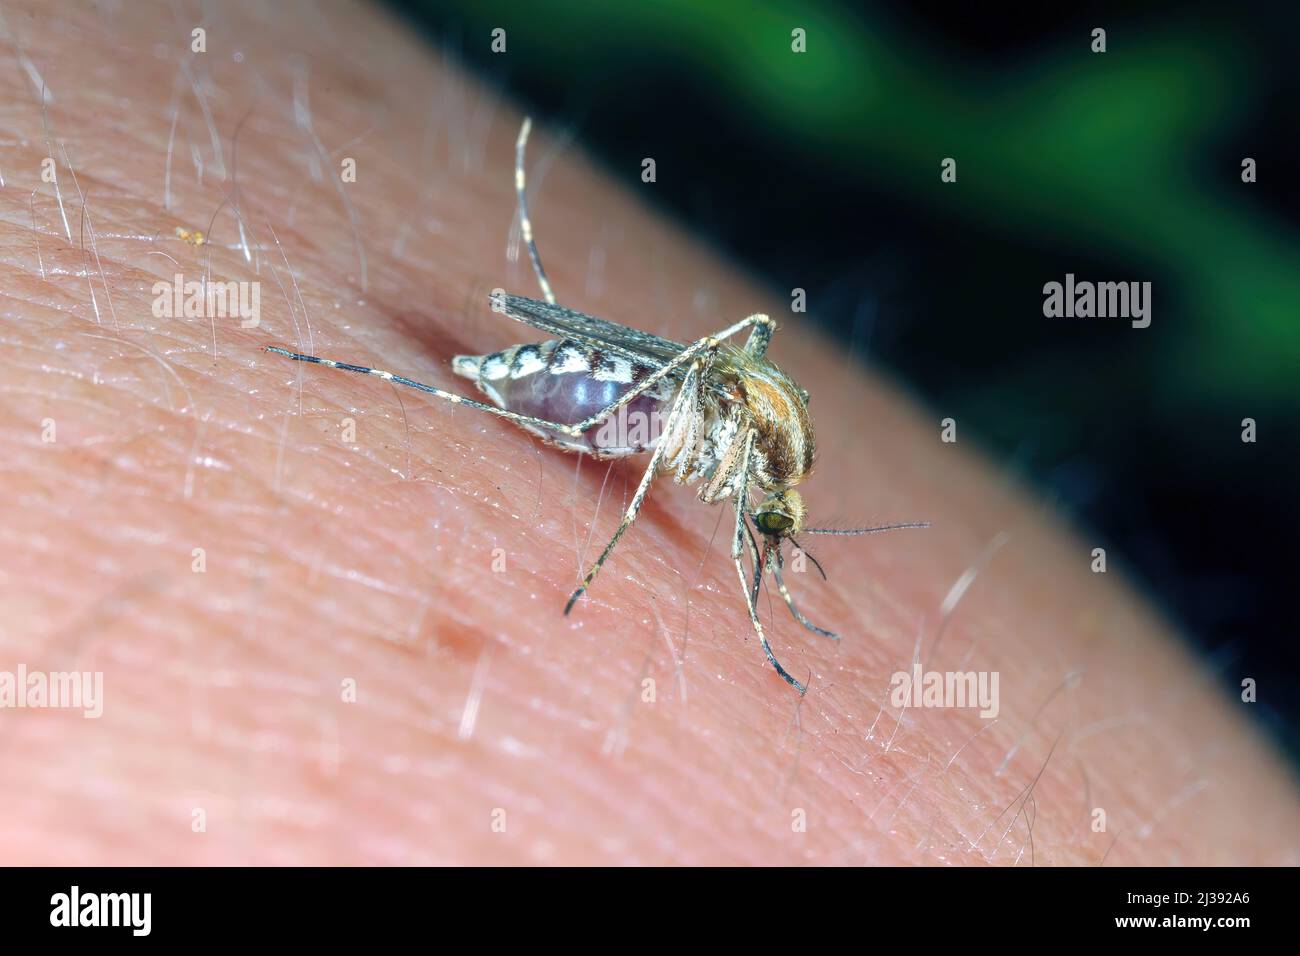 Dangerous Malaria Infected Mosquito Skin Bite. Leishmaniasis, Encephalitis, Yellow Fever, Dengue, Malaria Disease, Mayaro or Zika Virus Infectious. Stock Photo